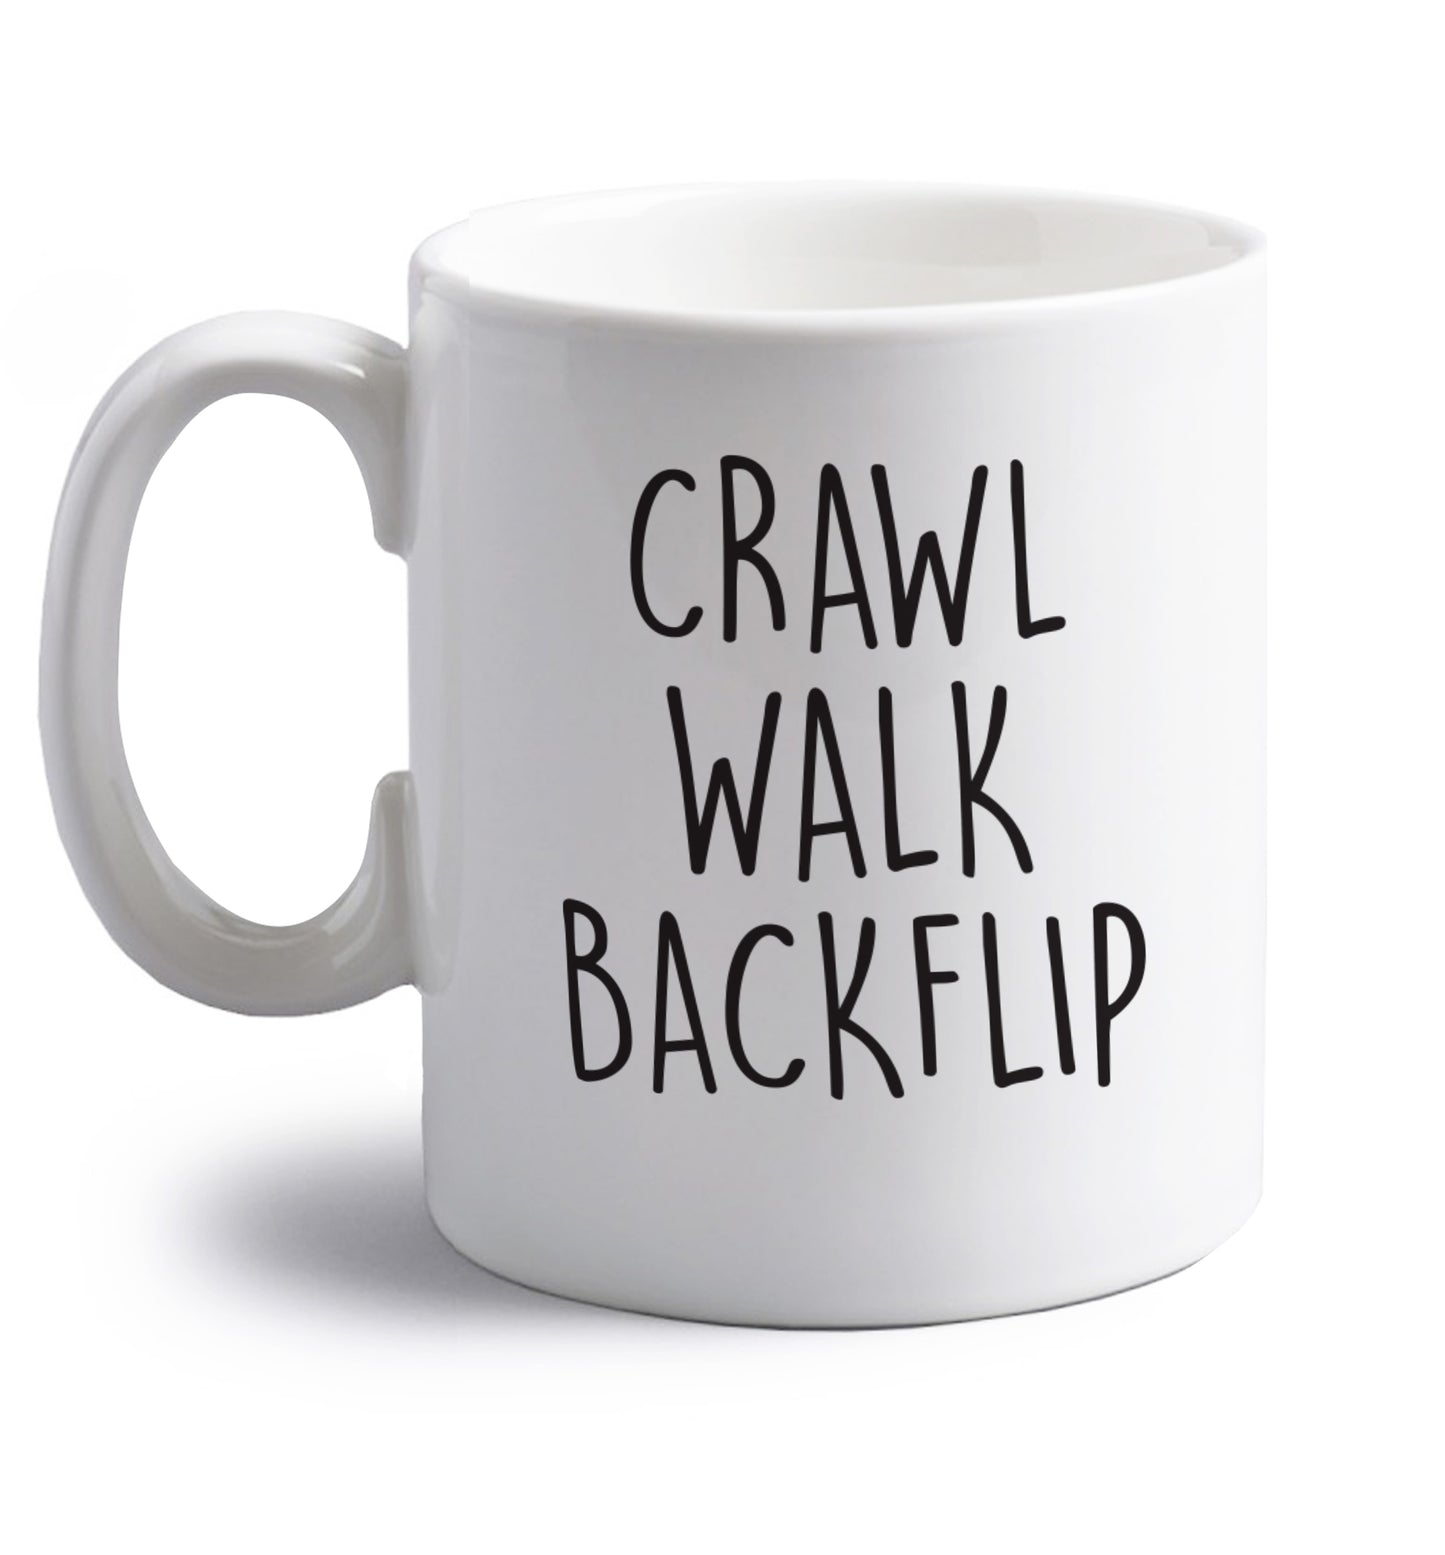 Crawl Walk Backflip right handed white ceramic mug 